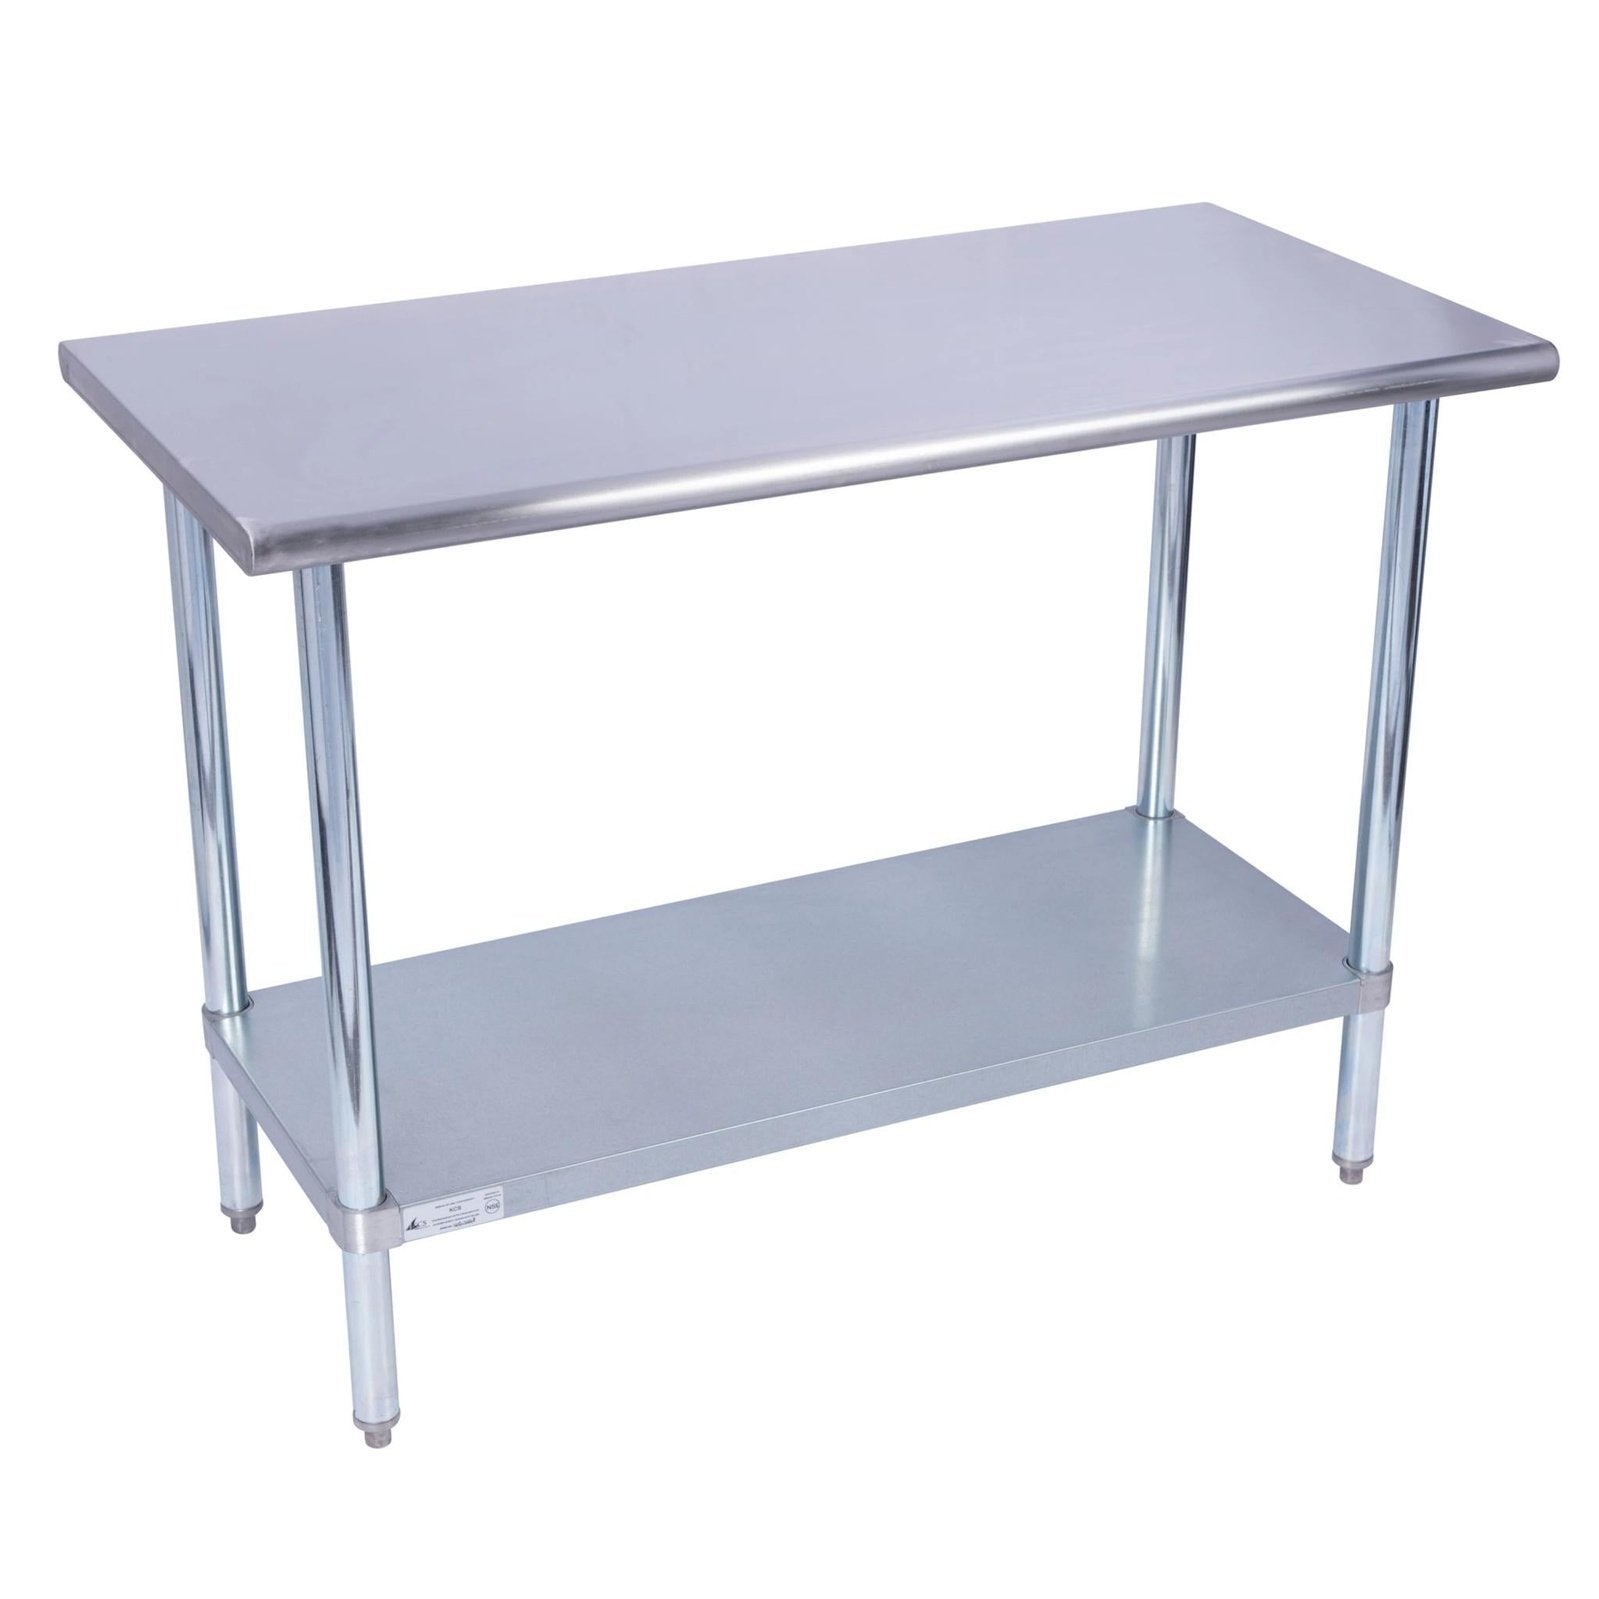 KCS 24″x 84″ Stainless Steel Work Tables with Galvanized Undershelf